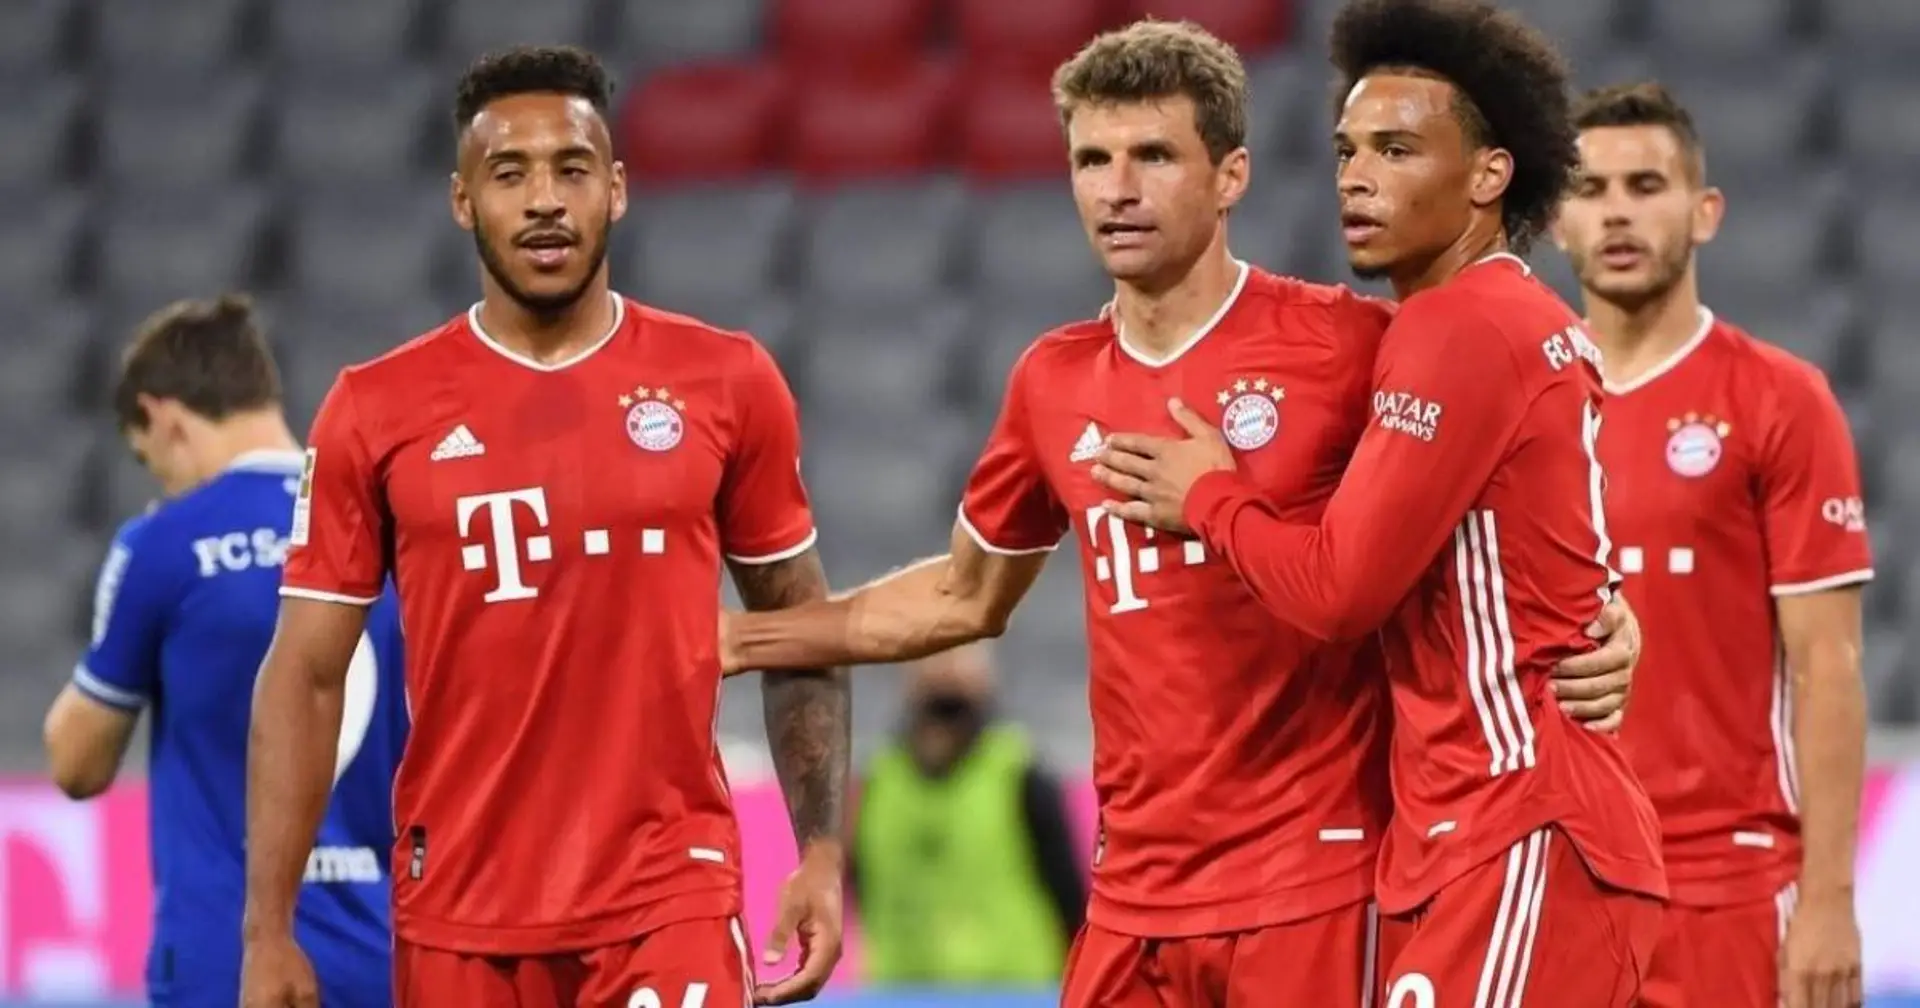 22 Siege in Folge: Bayern egalisiert Real Madrids Rekord